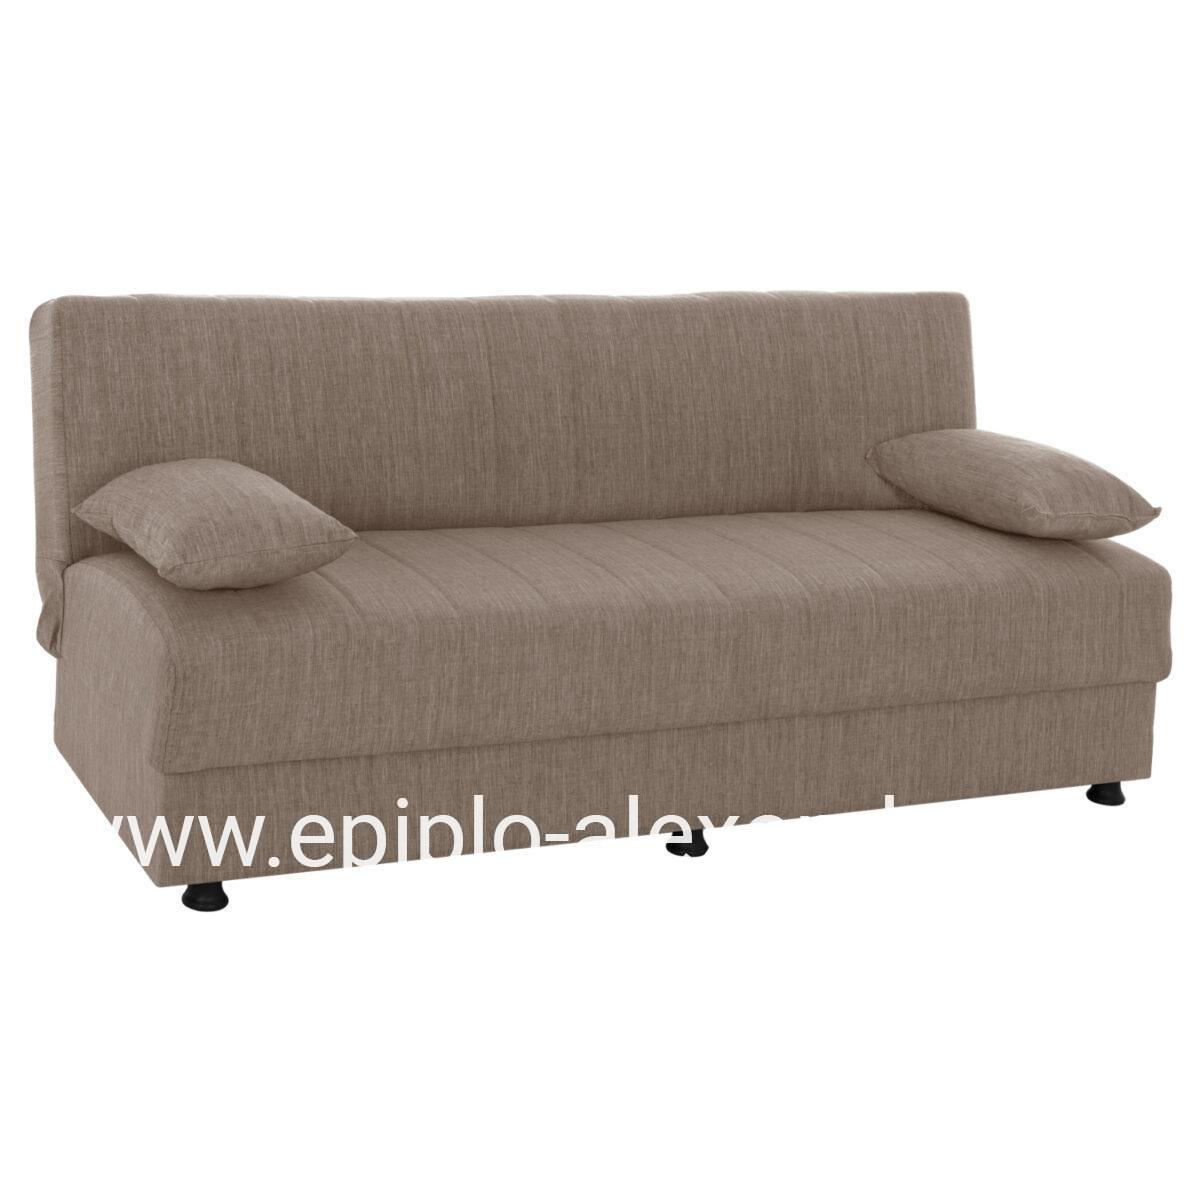 Hm3239.04 ANDRI three-seater sofa-bed